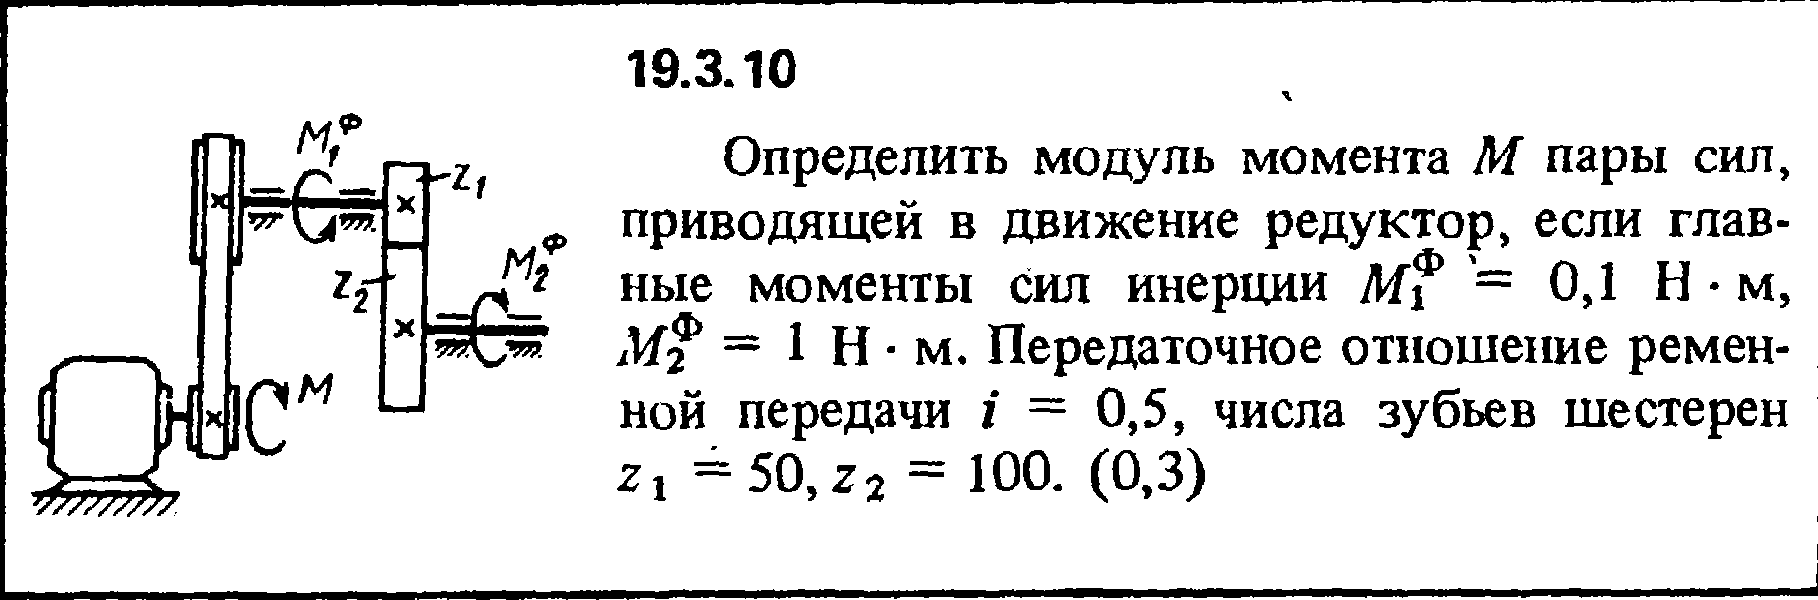 Решение 19.3.10 из сборника (решебника) Кепе О.Е. 1989